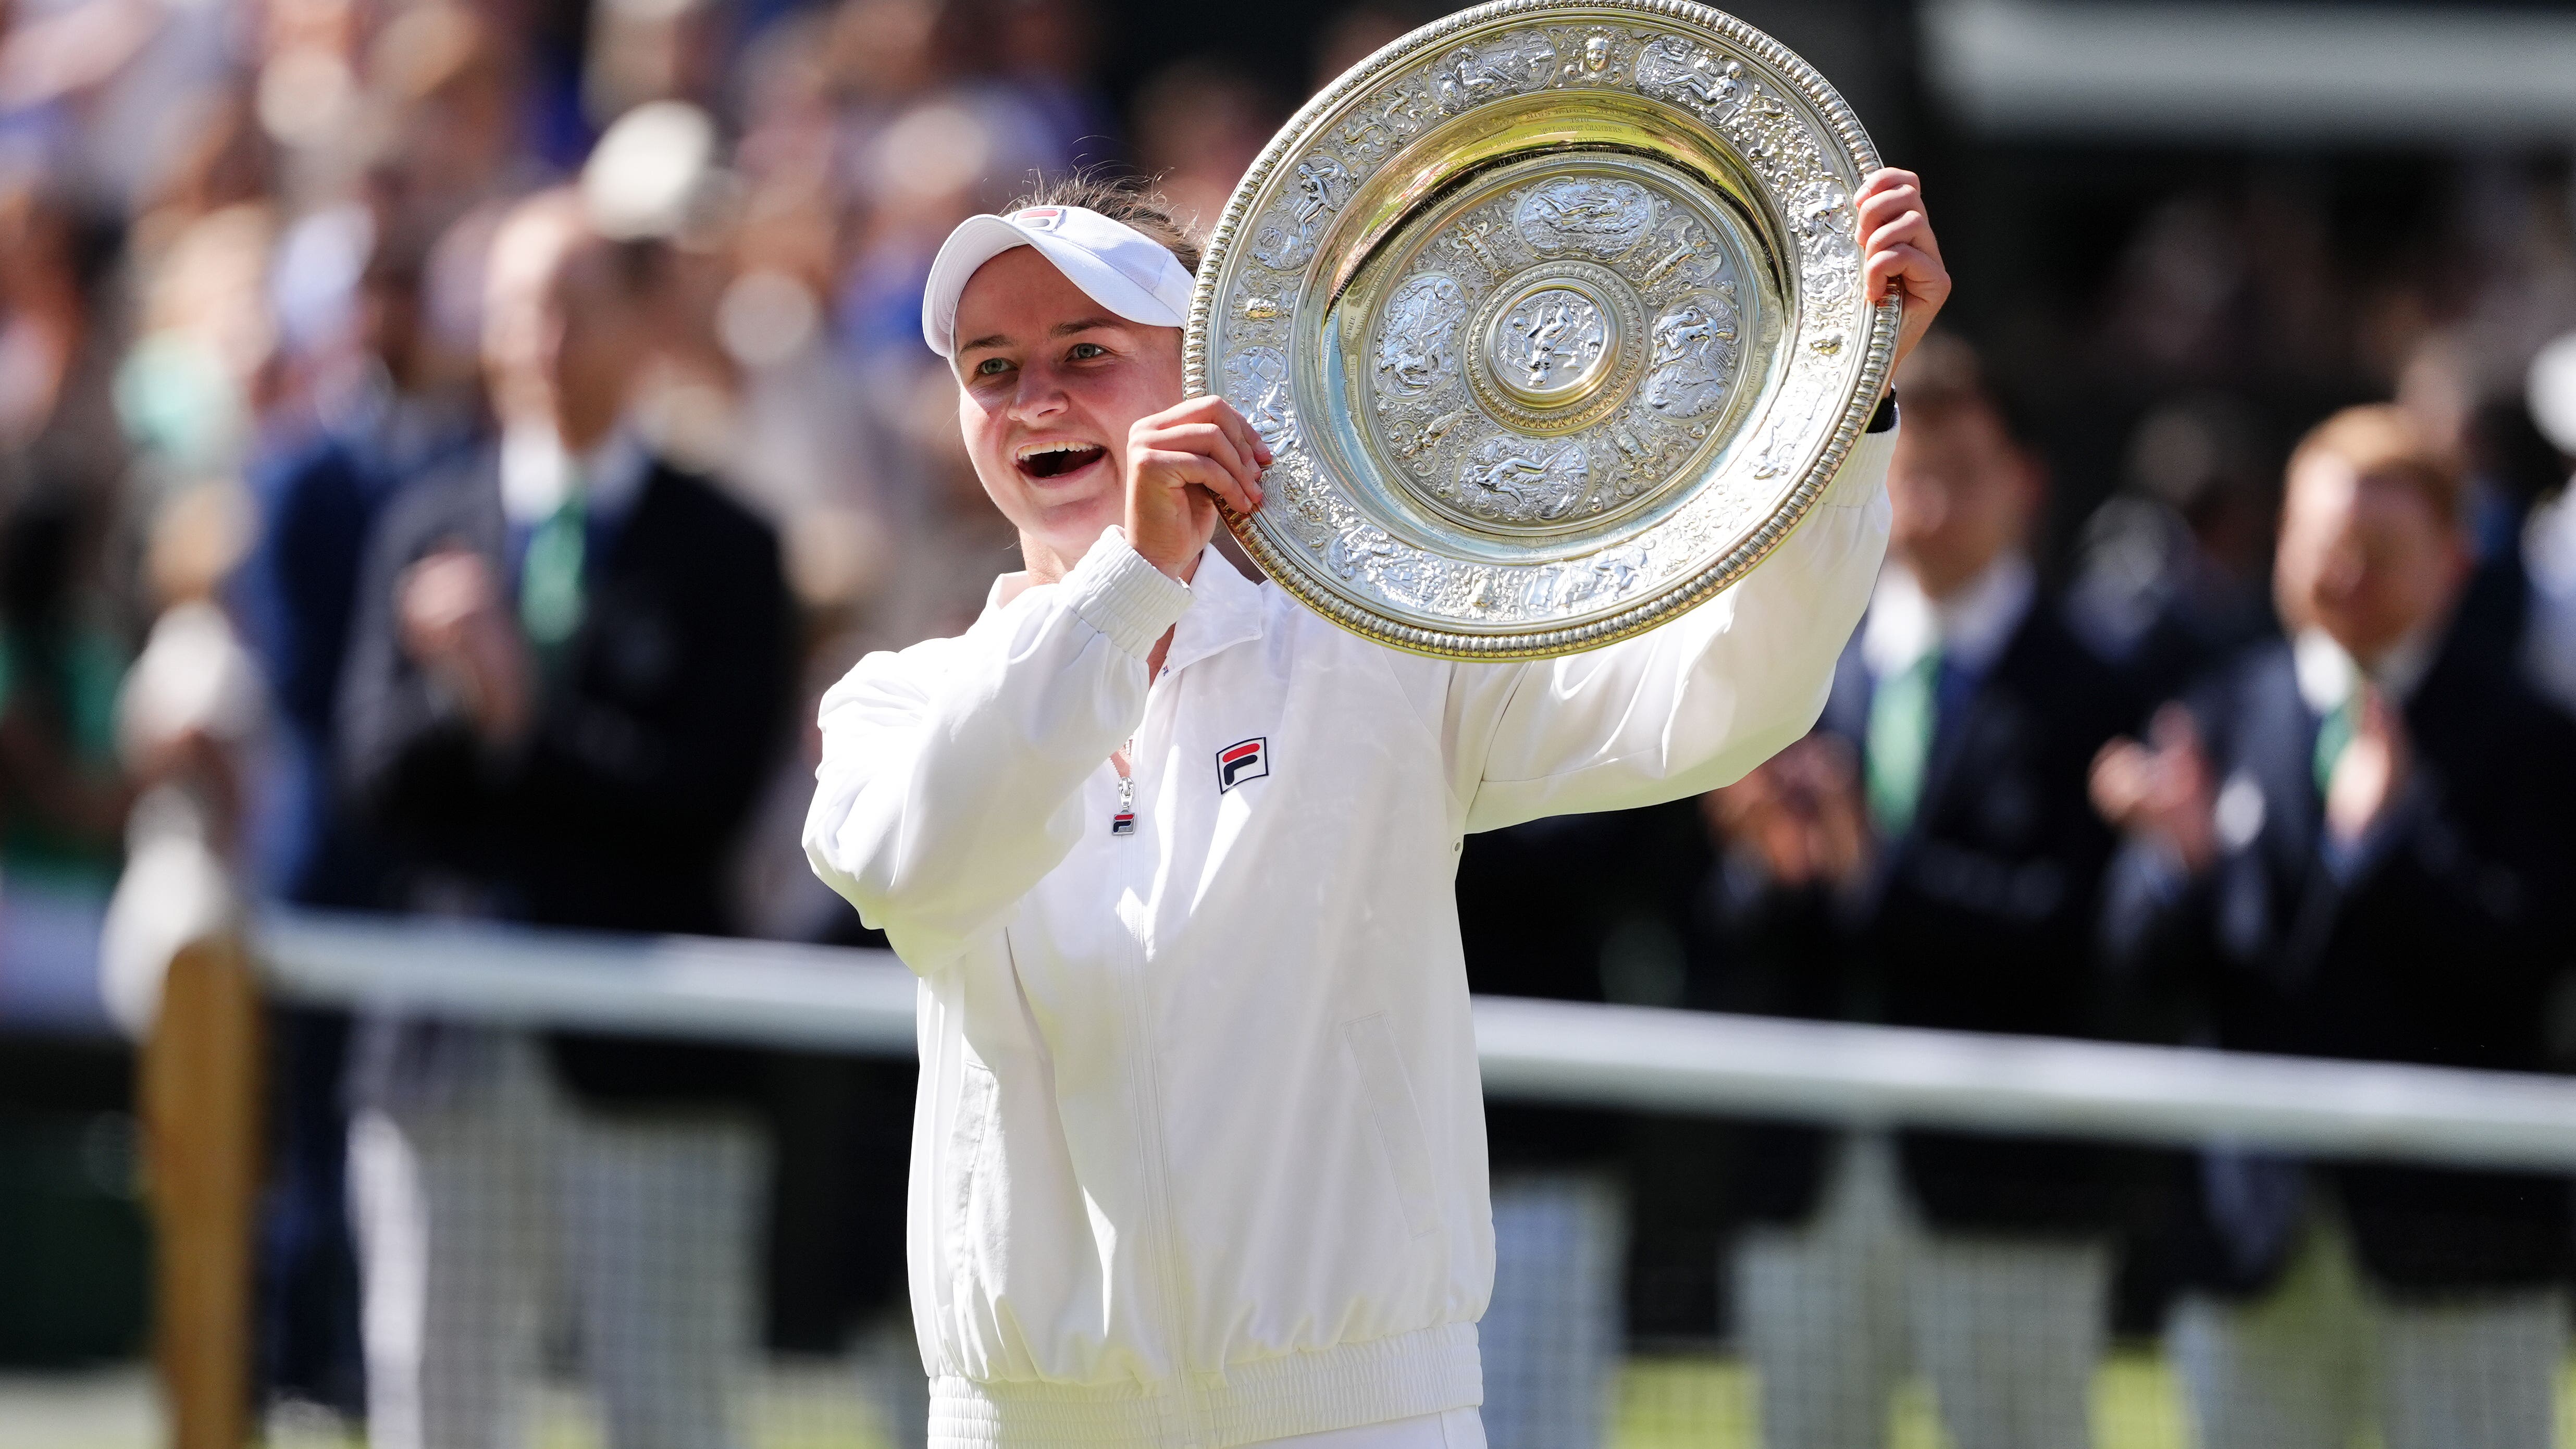 Barbora Krejcikova holds off Jasmine Paolini fightback to win Wimbledon title